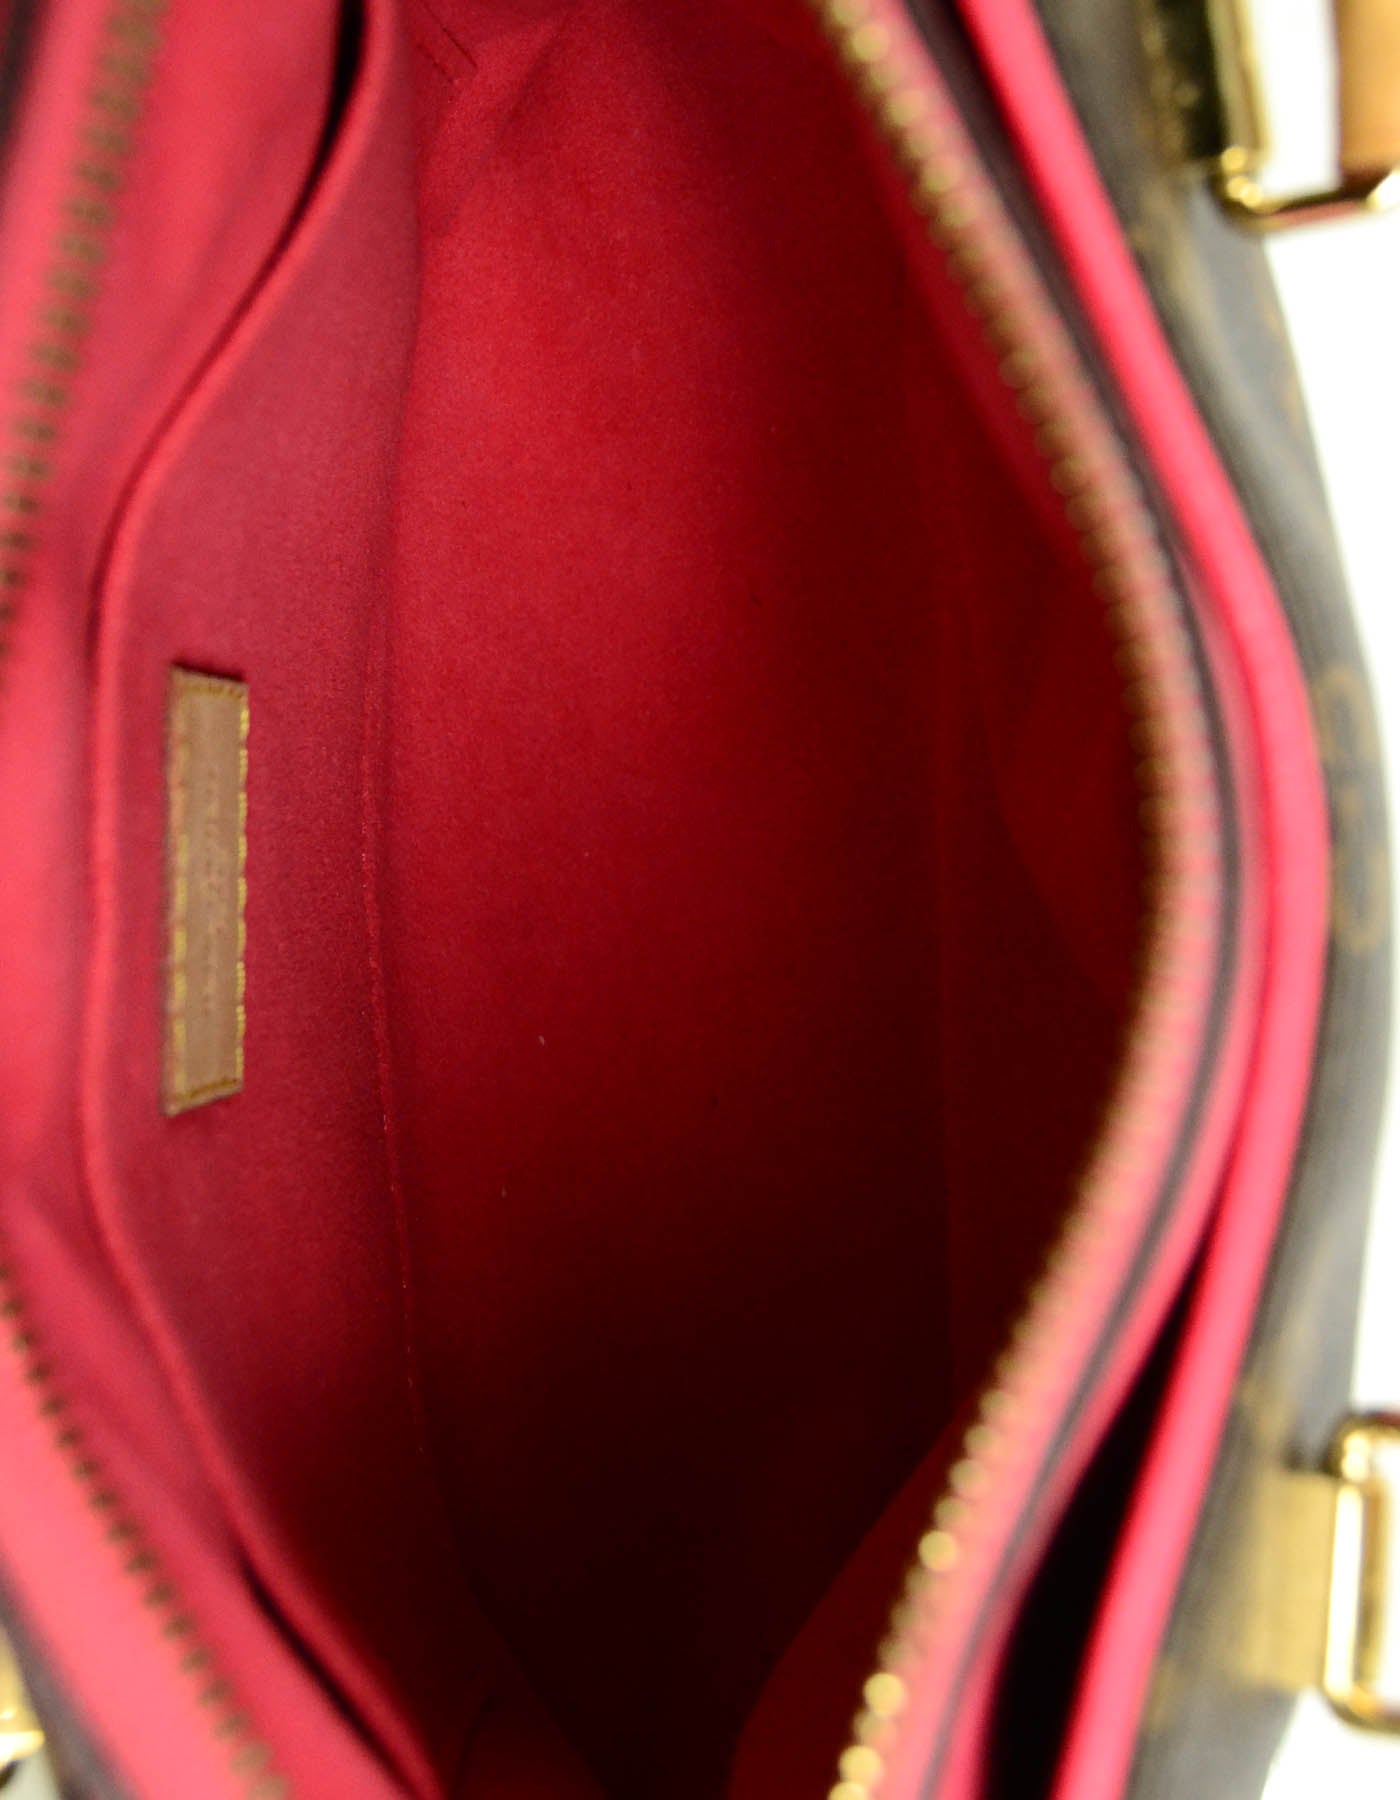 Used Several Times Louis Vuitton Monogram Pallas 2Way Bag Rose woman bag